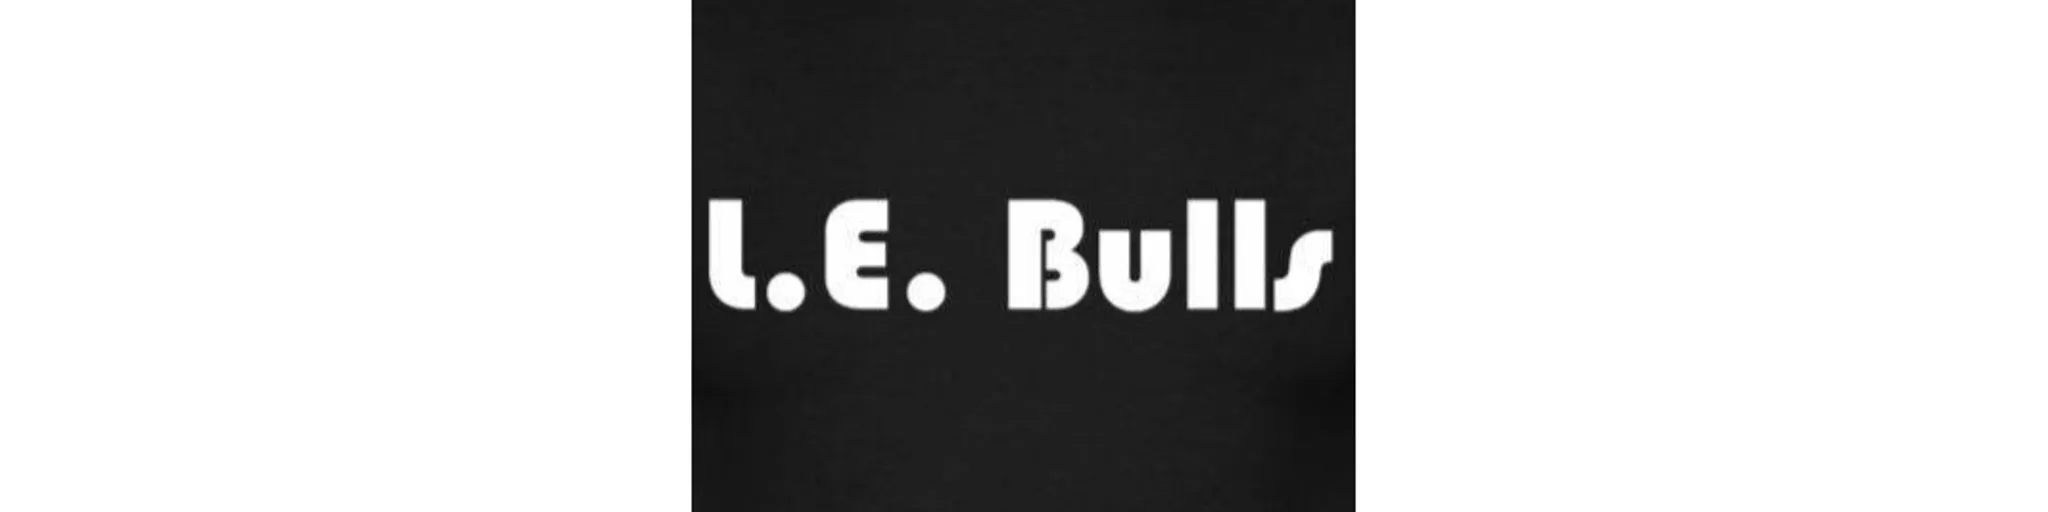 L.E. Bulls, OFC seit 20. Oktober 2009 